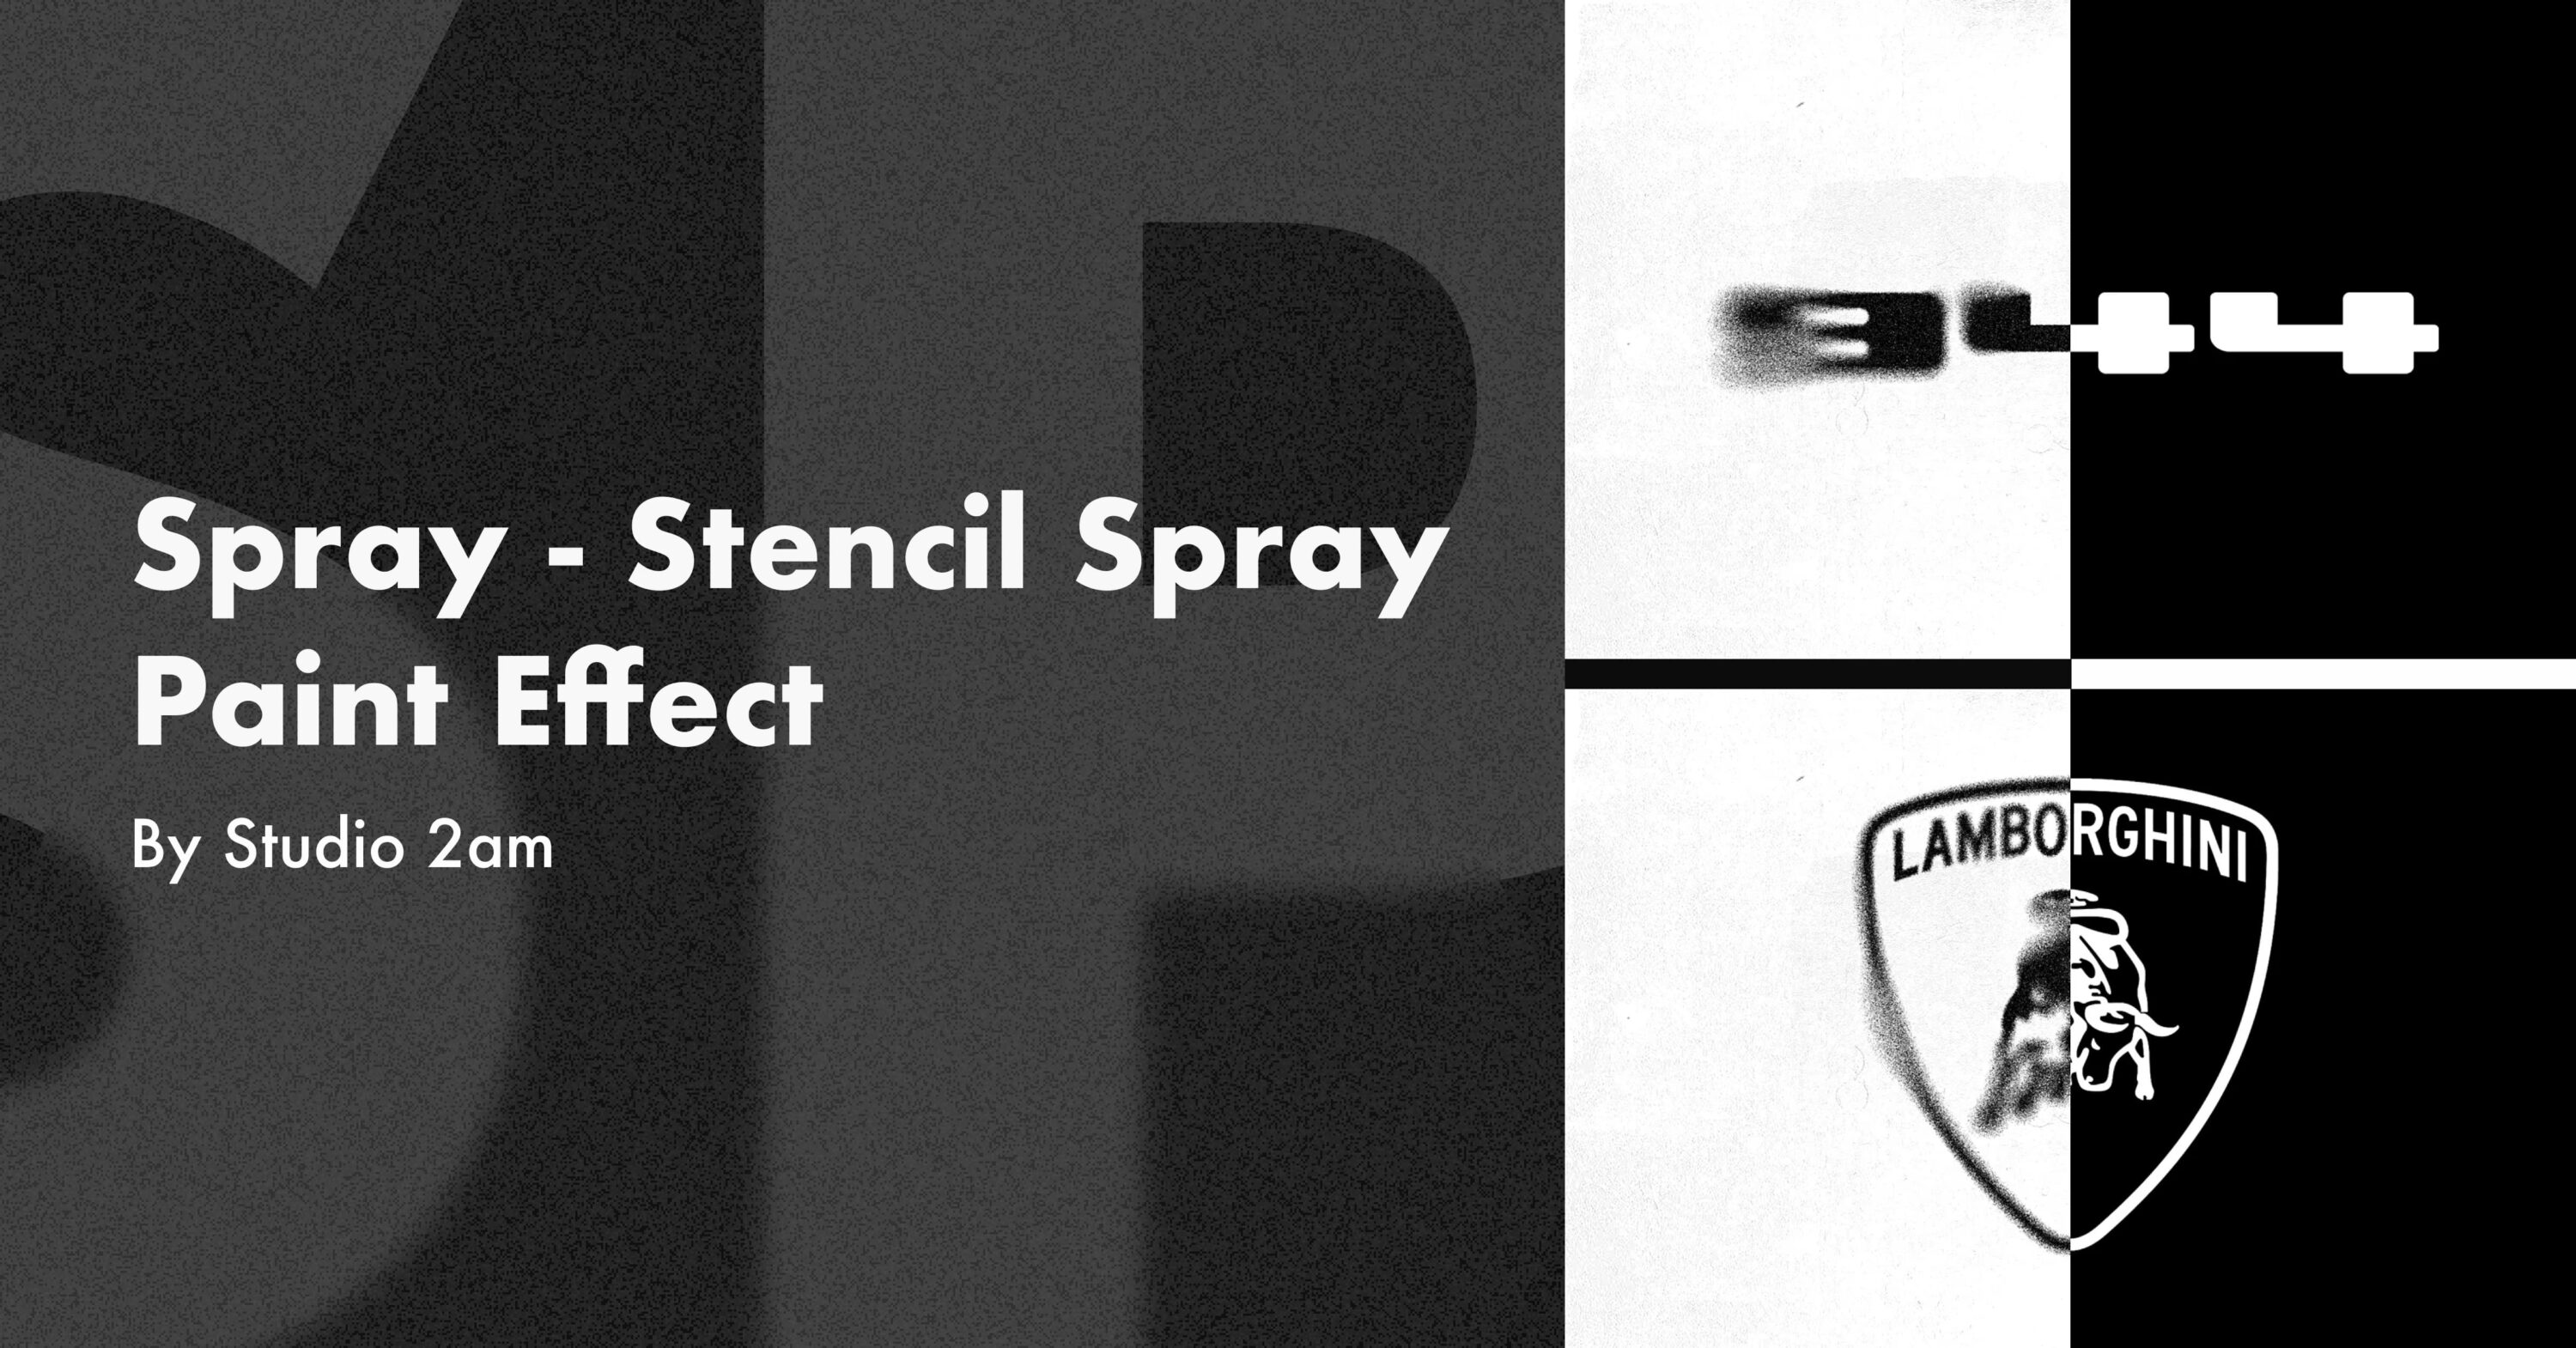 Spray - Stencil Spray Paint Effect facebook image.